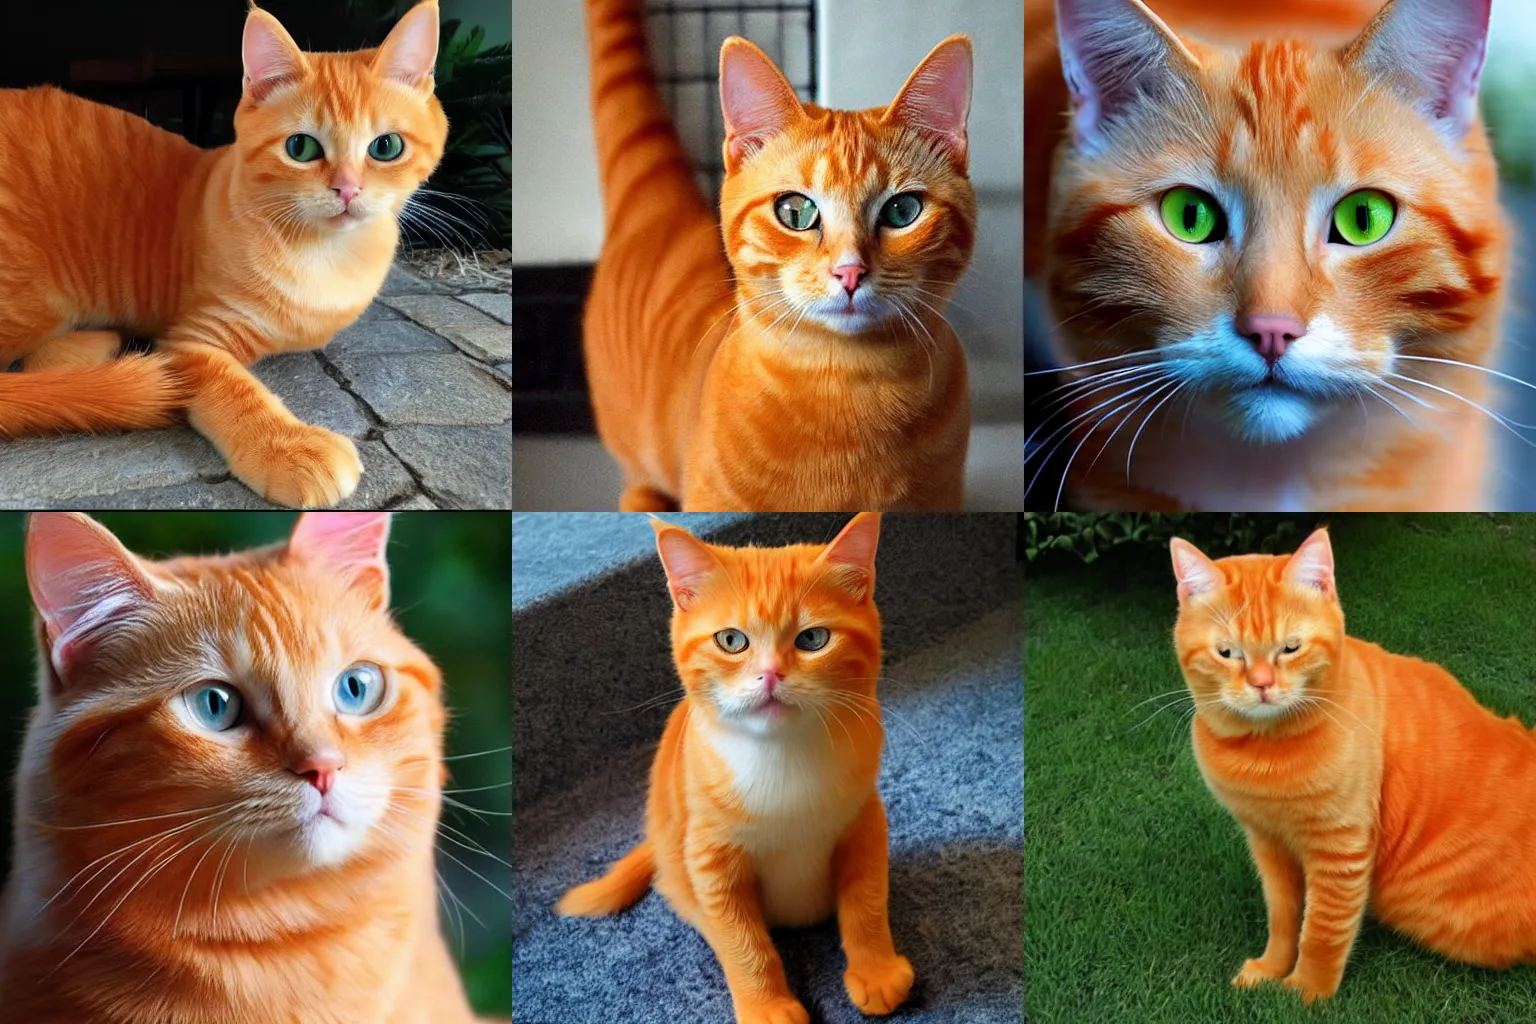 Prompt: prettiest orange tabby cat